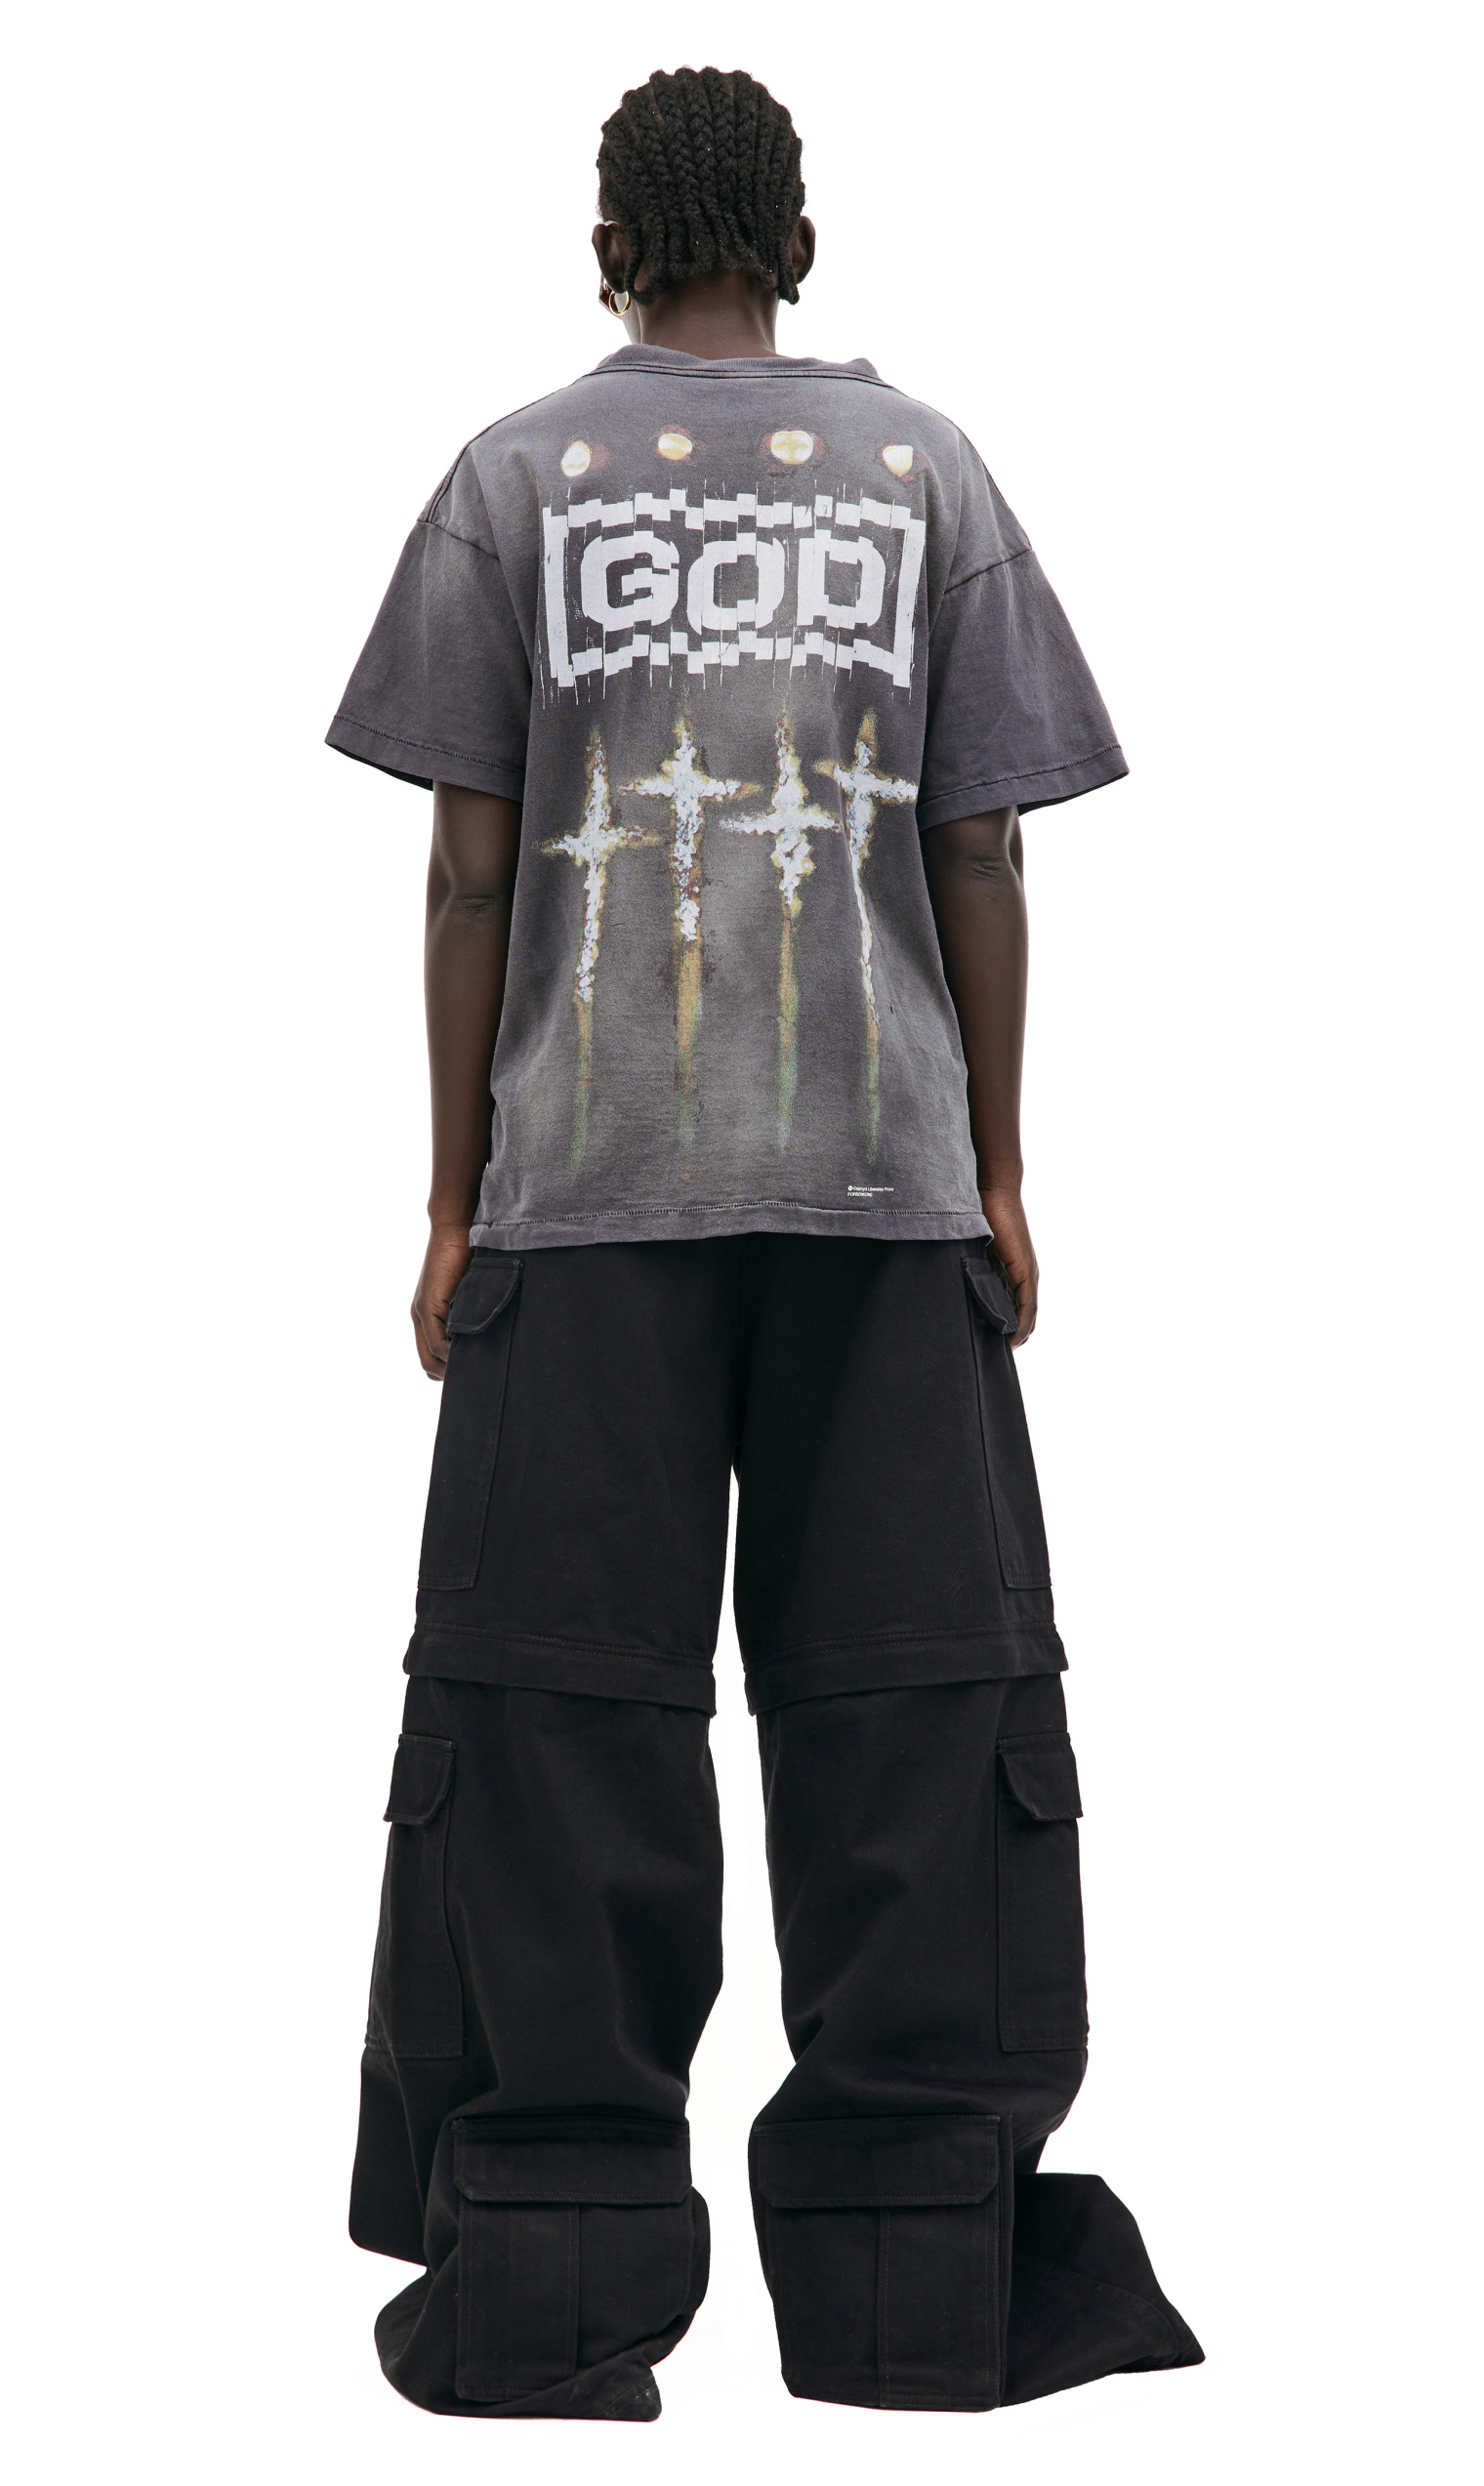 Buy Saint Michael women grey 'god' printed t-shirt for €570 online